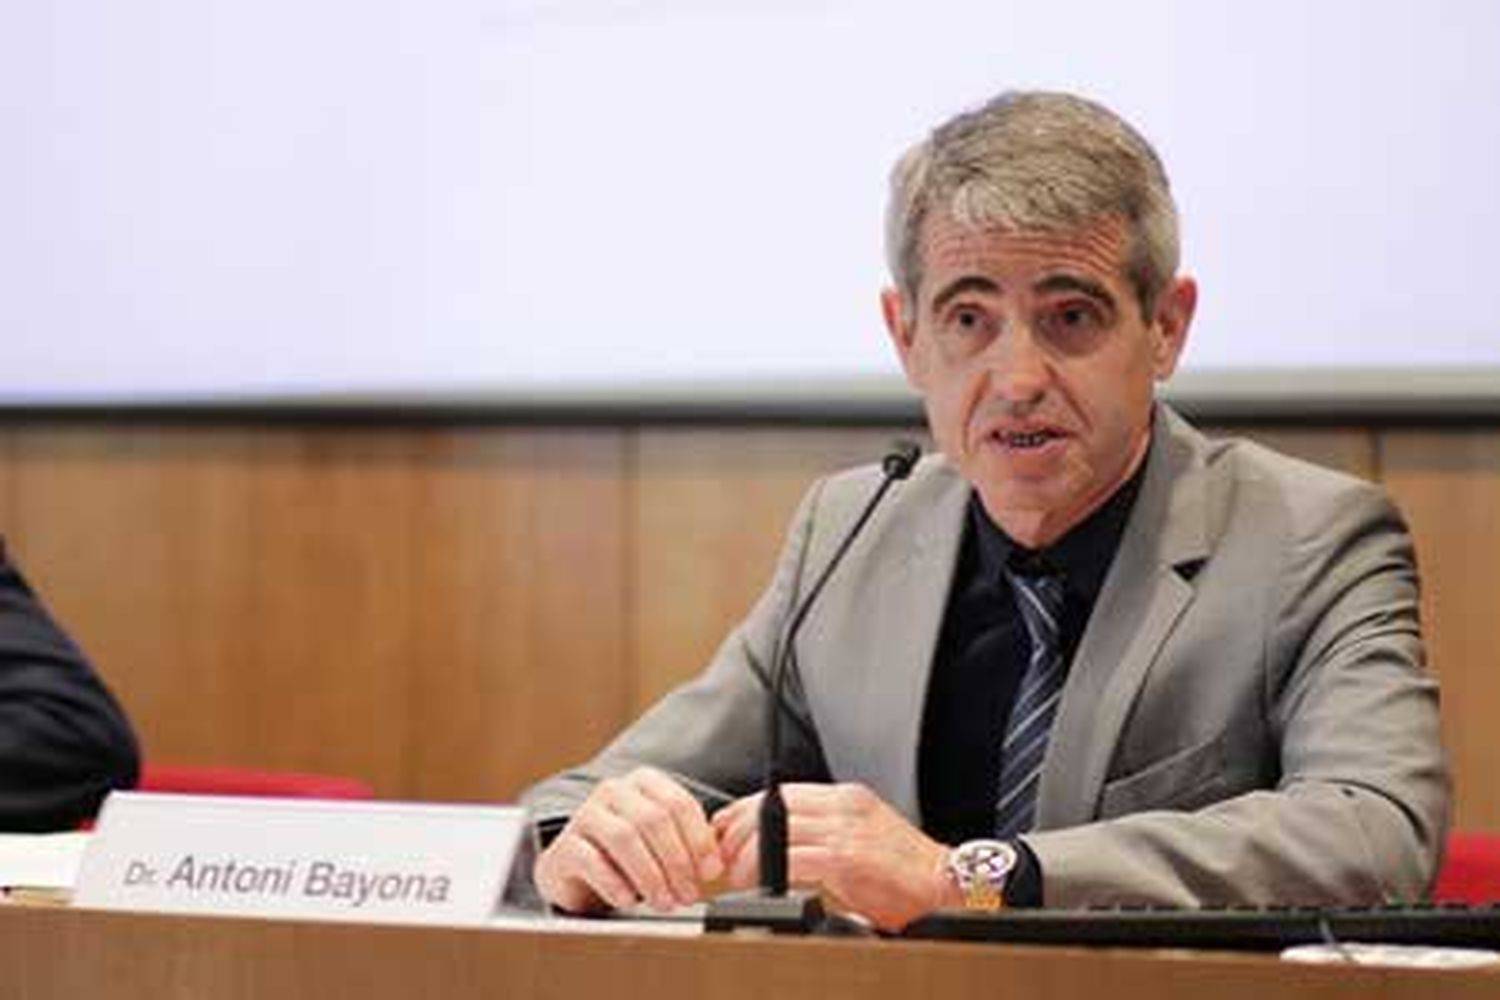 Antoni Bayona